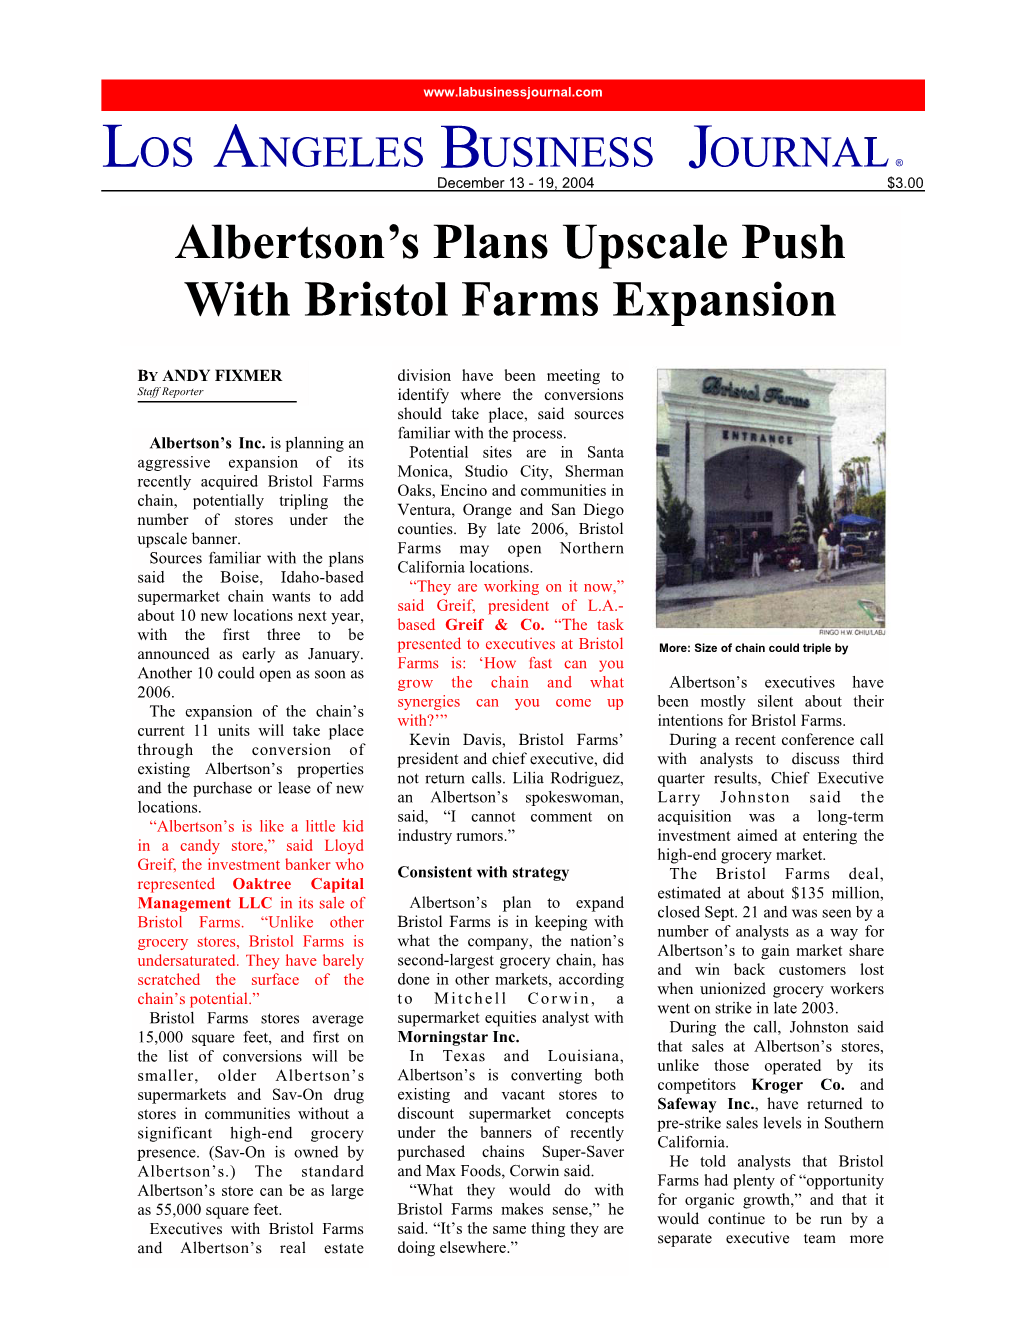 Albertson's Plans Upscale Push with Bristol Farms Expansion